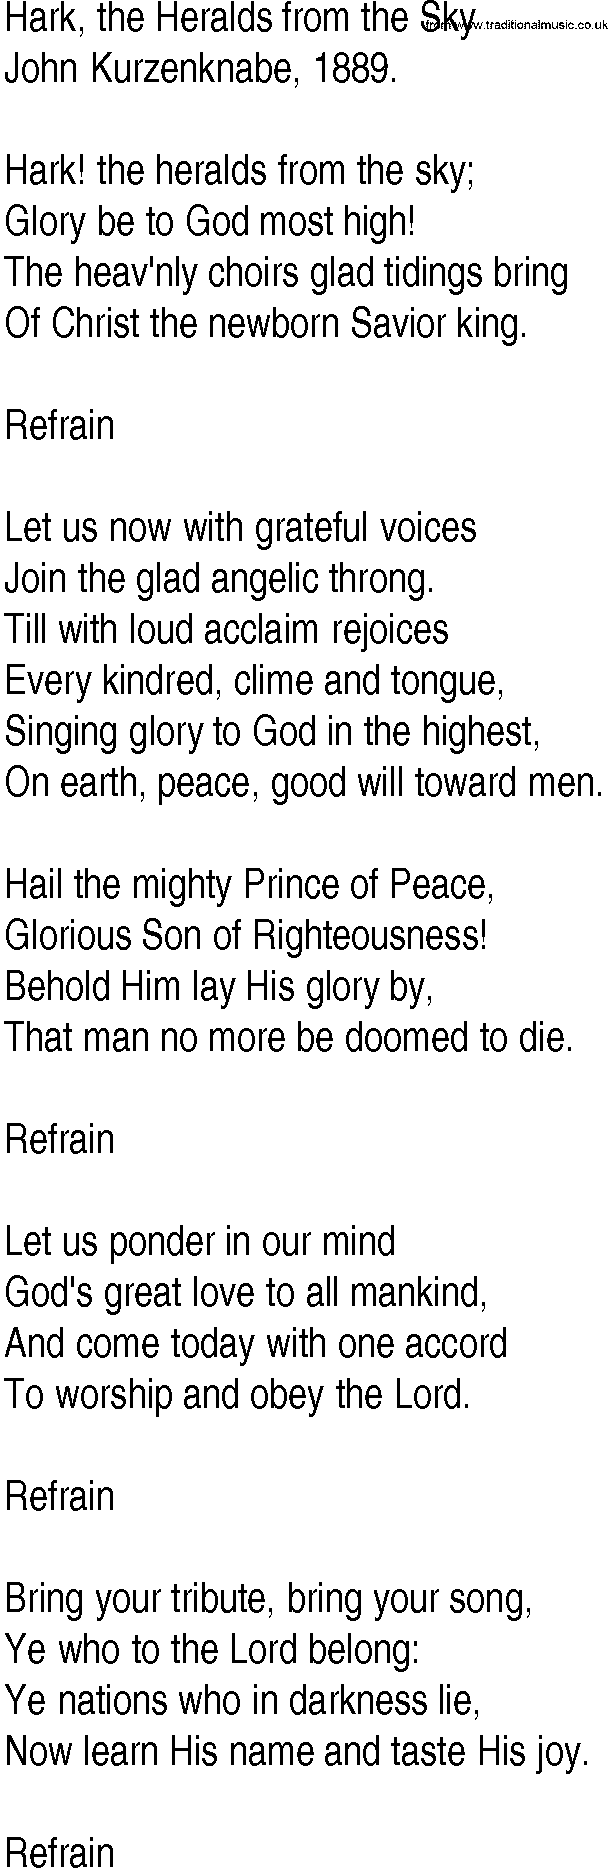 Hymn and Gospel Song: Hark, the Heralds from the Sky by John Kurzenknabe lyrics